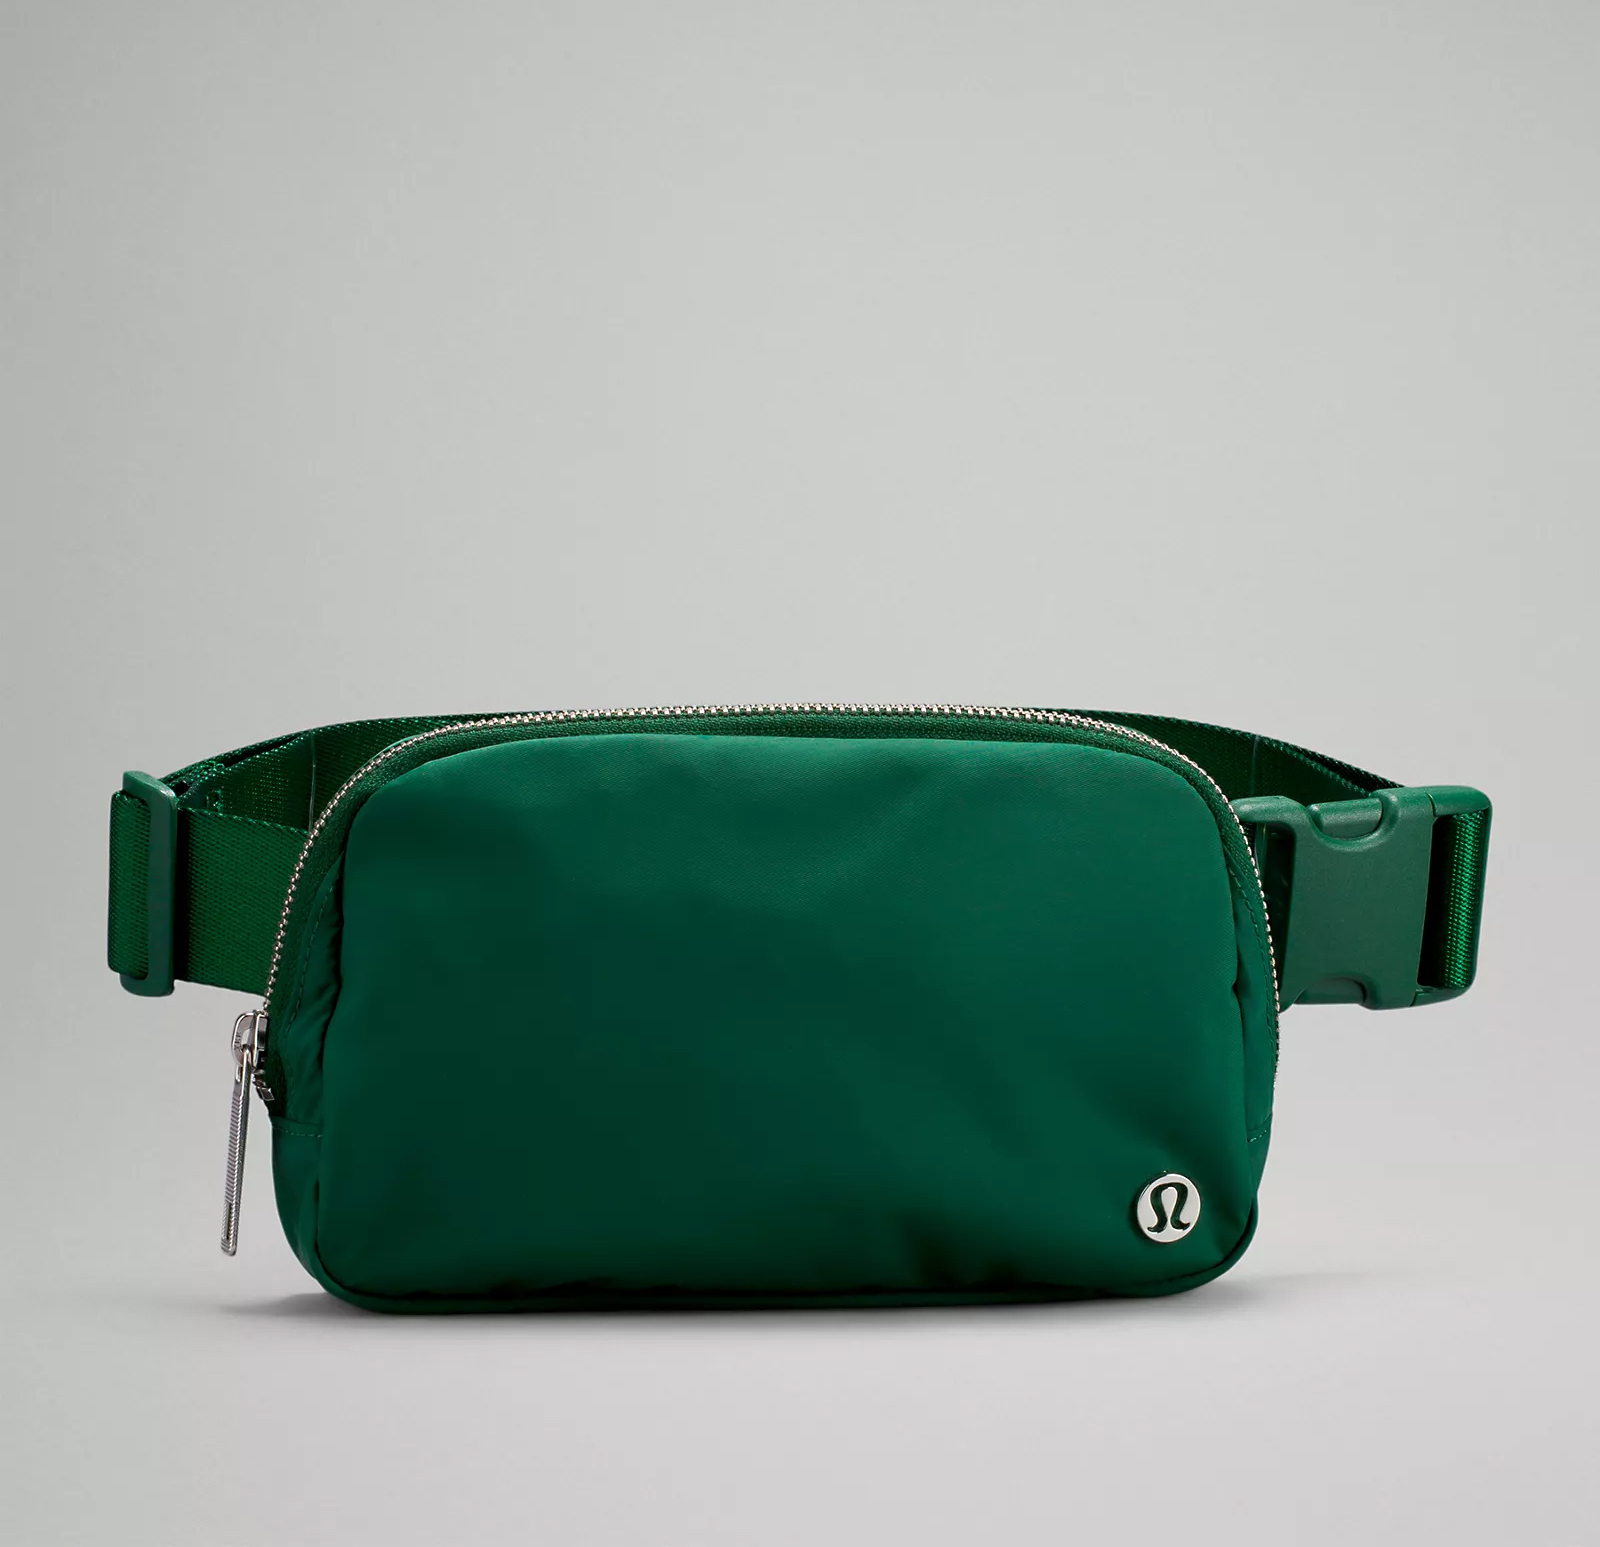 lululemon everywhere belt bag everglade green